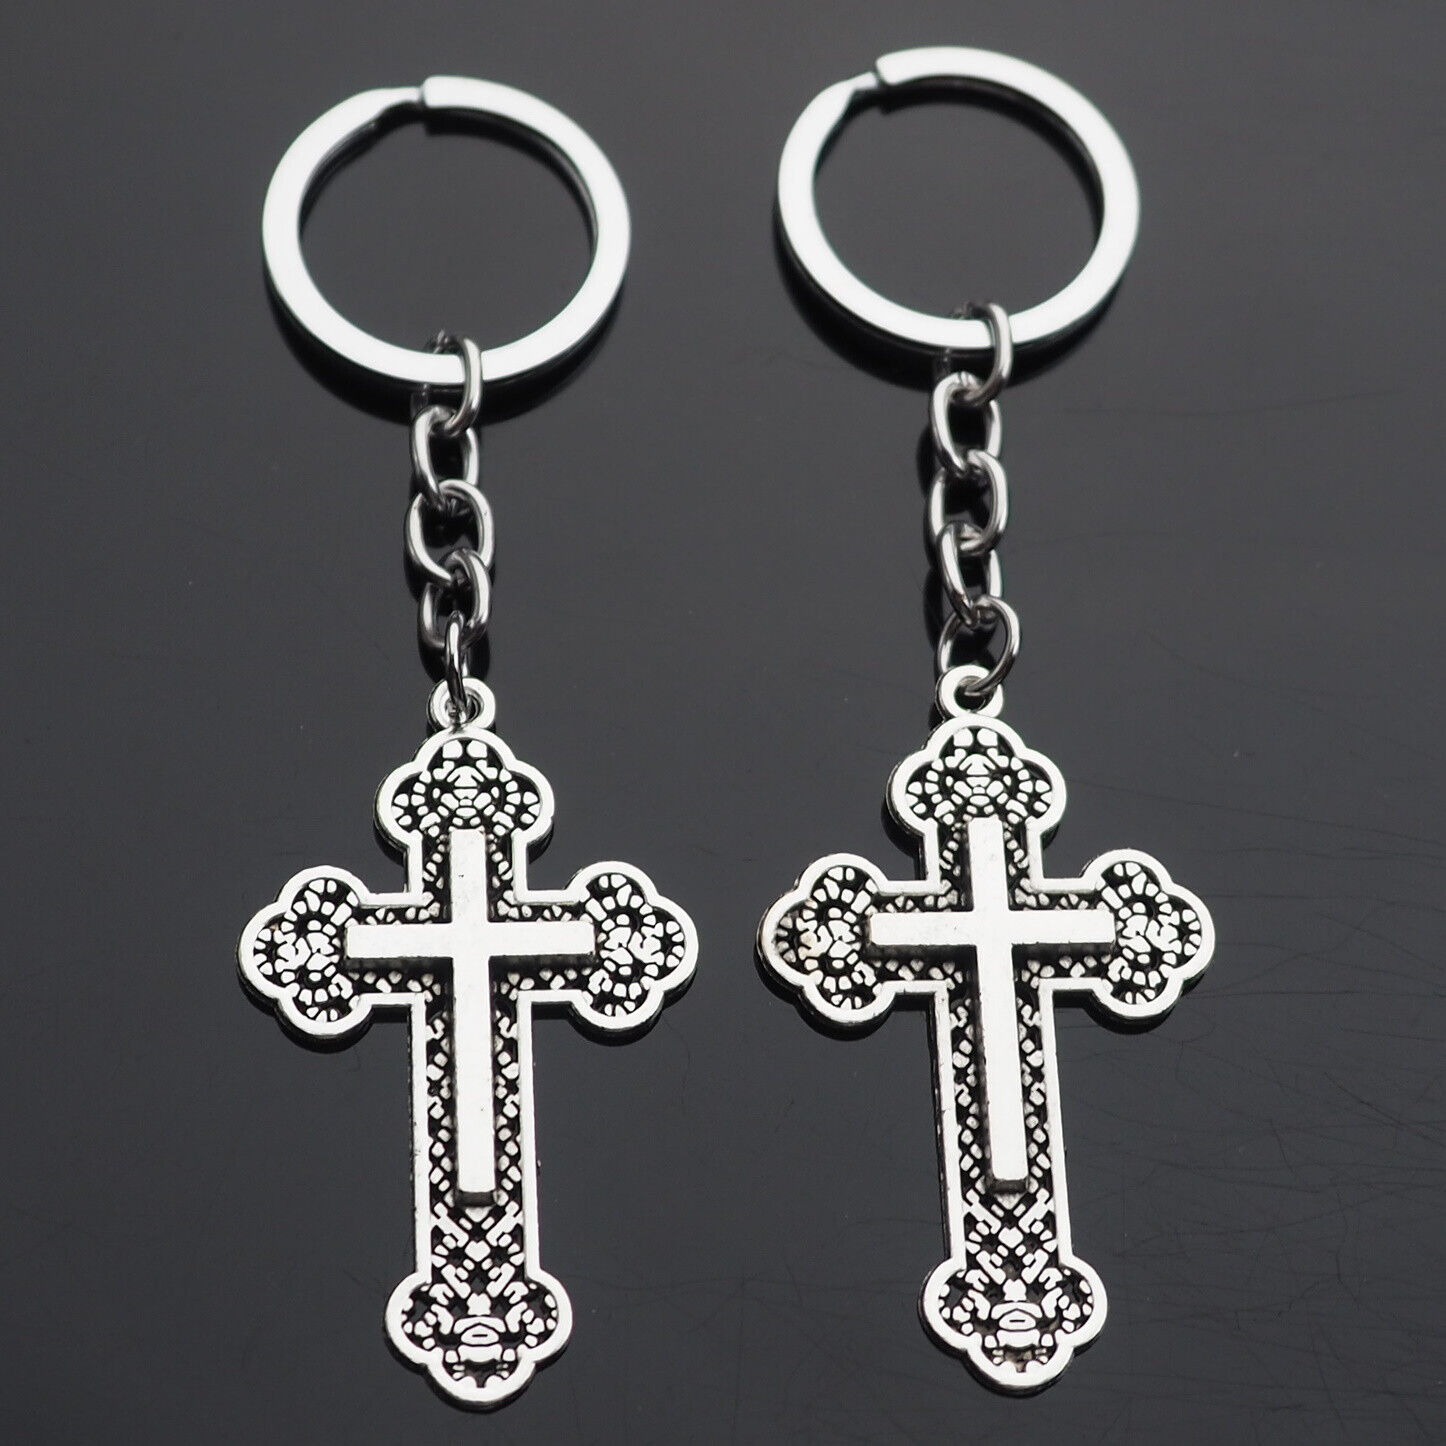 2x PCS Cross Design Christian Christianity Keychain Pendant Key Chain Ring Gift